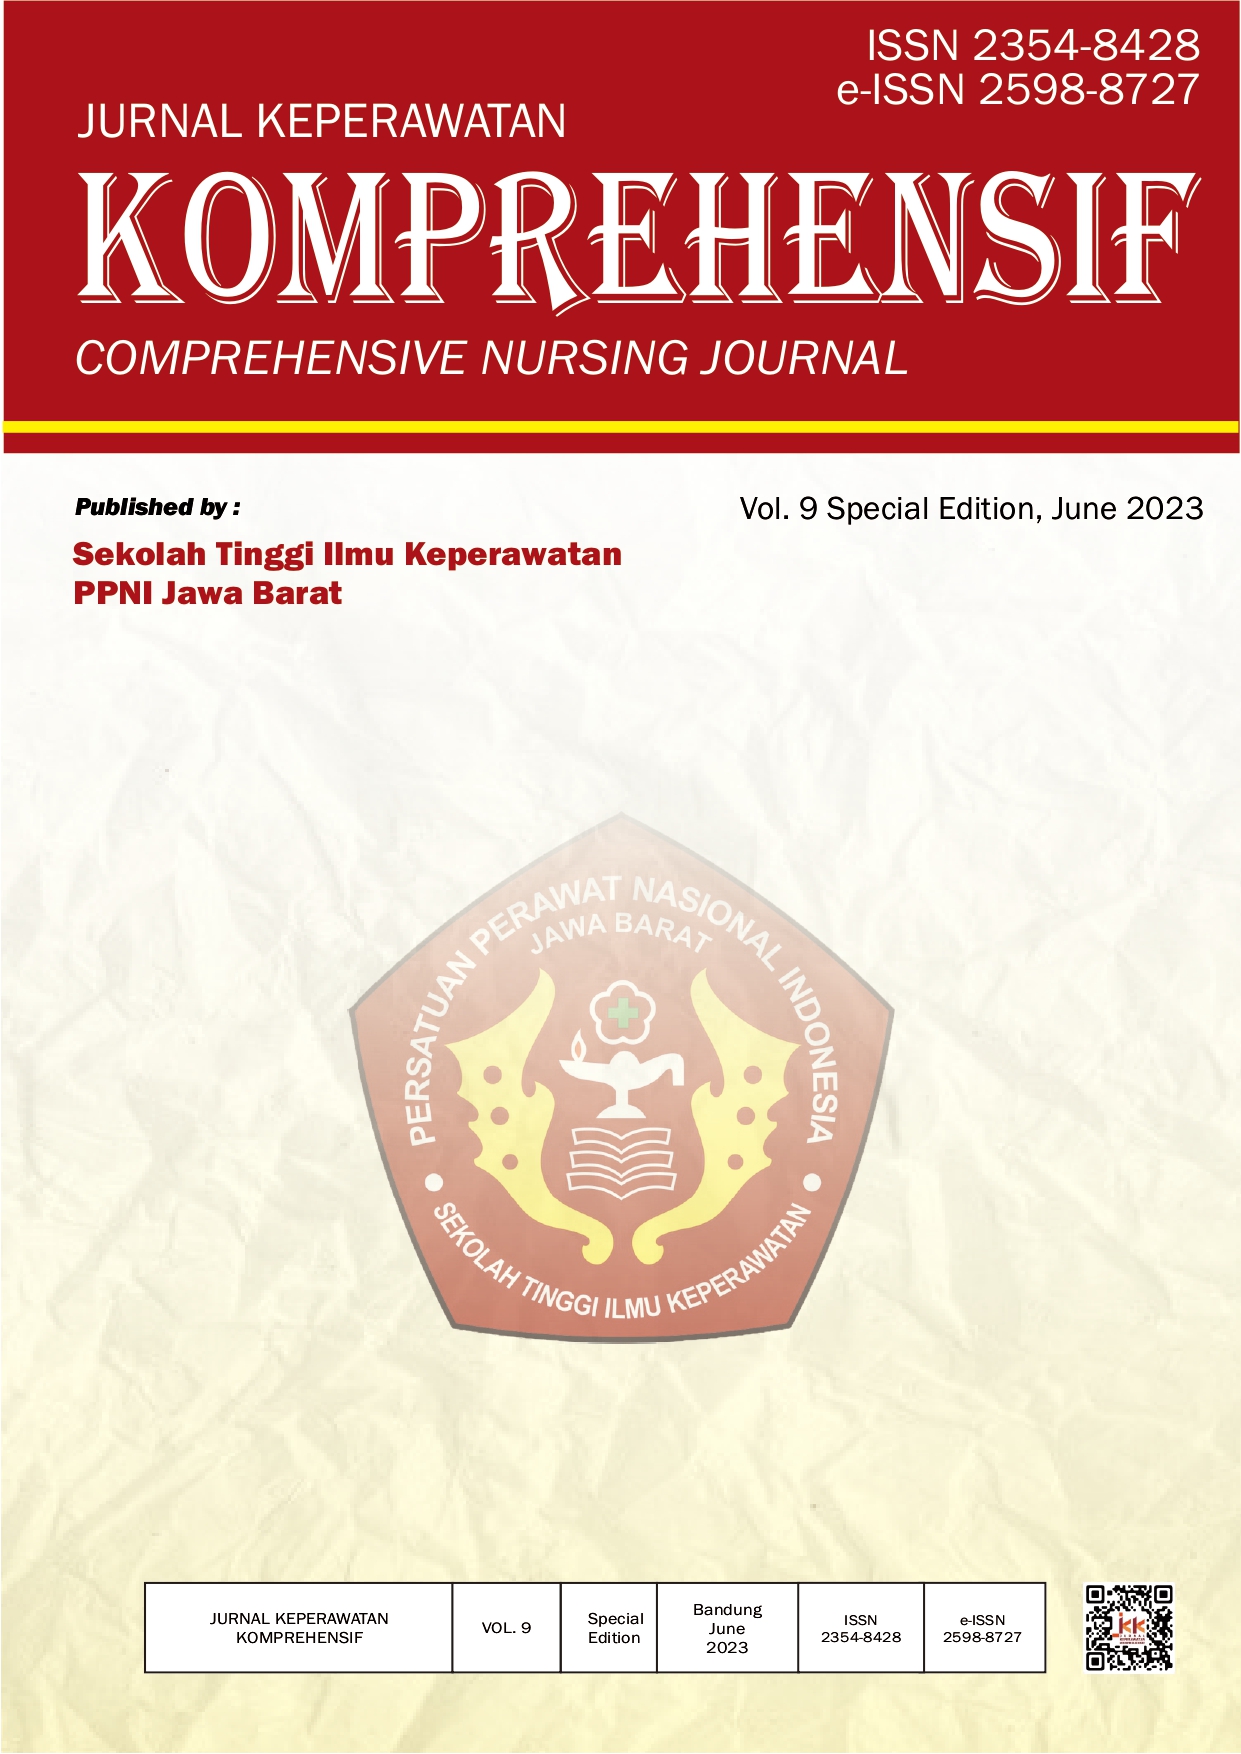 					View Vol. 9 No. SpecialEdition (2023): JURNAL KEPERAWATAN KOMPREHENSIF (COMPREHENSIVE NURSING JOURNAL)
				